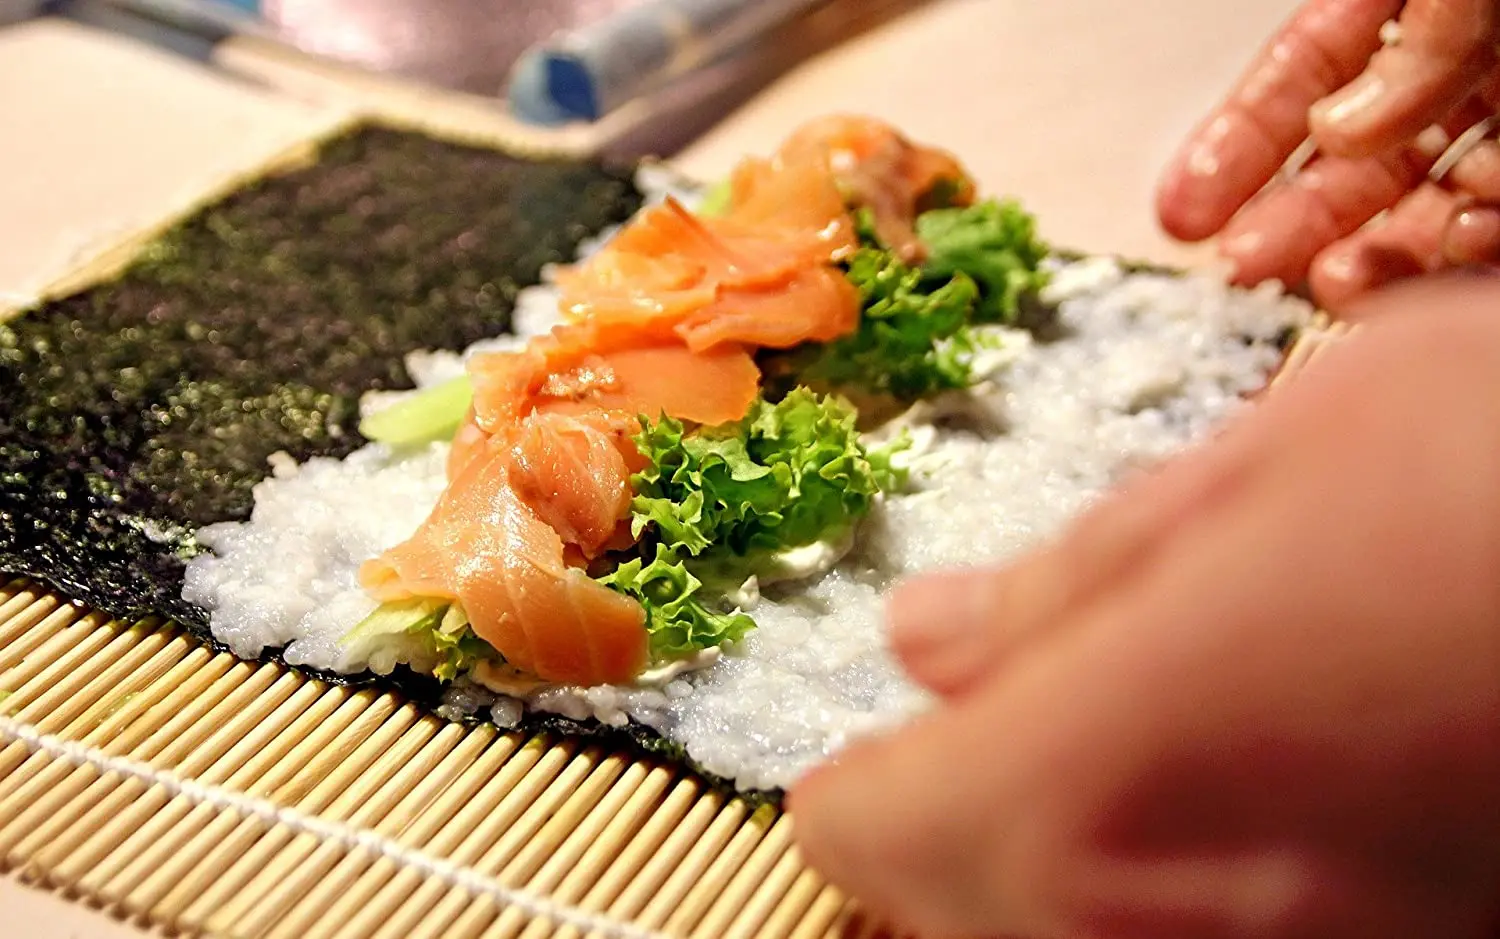 Nanli 3PCS Nonstick Sushi Rolling Mat Reusable Homemade Sushi Making Kit  for Home Kitchen DIY Sushi Plate Mat